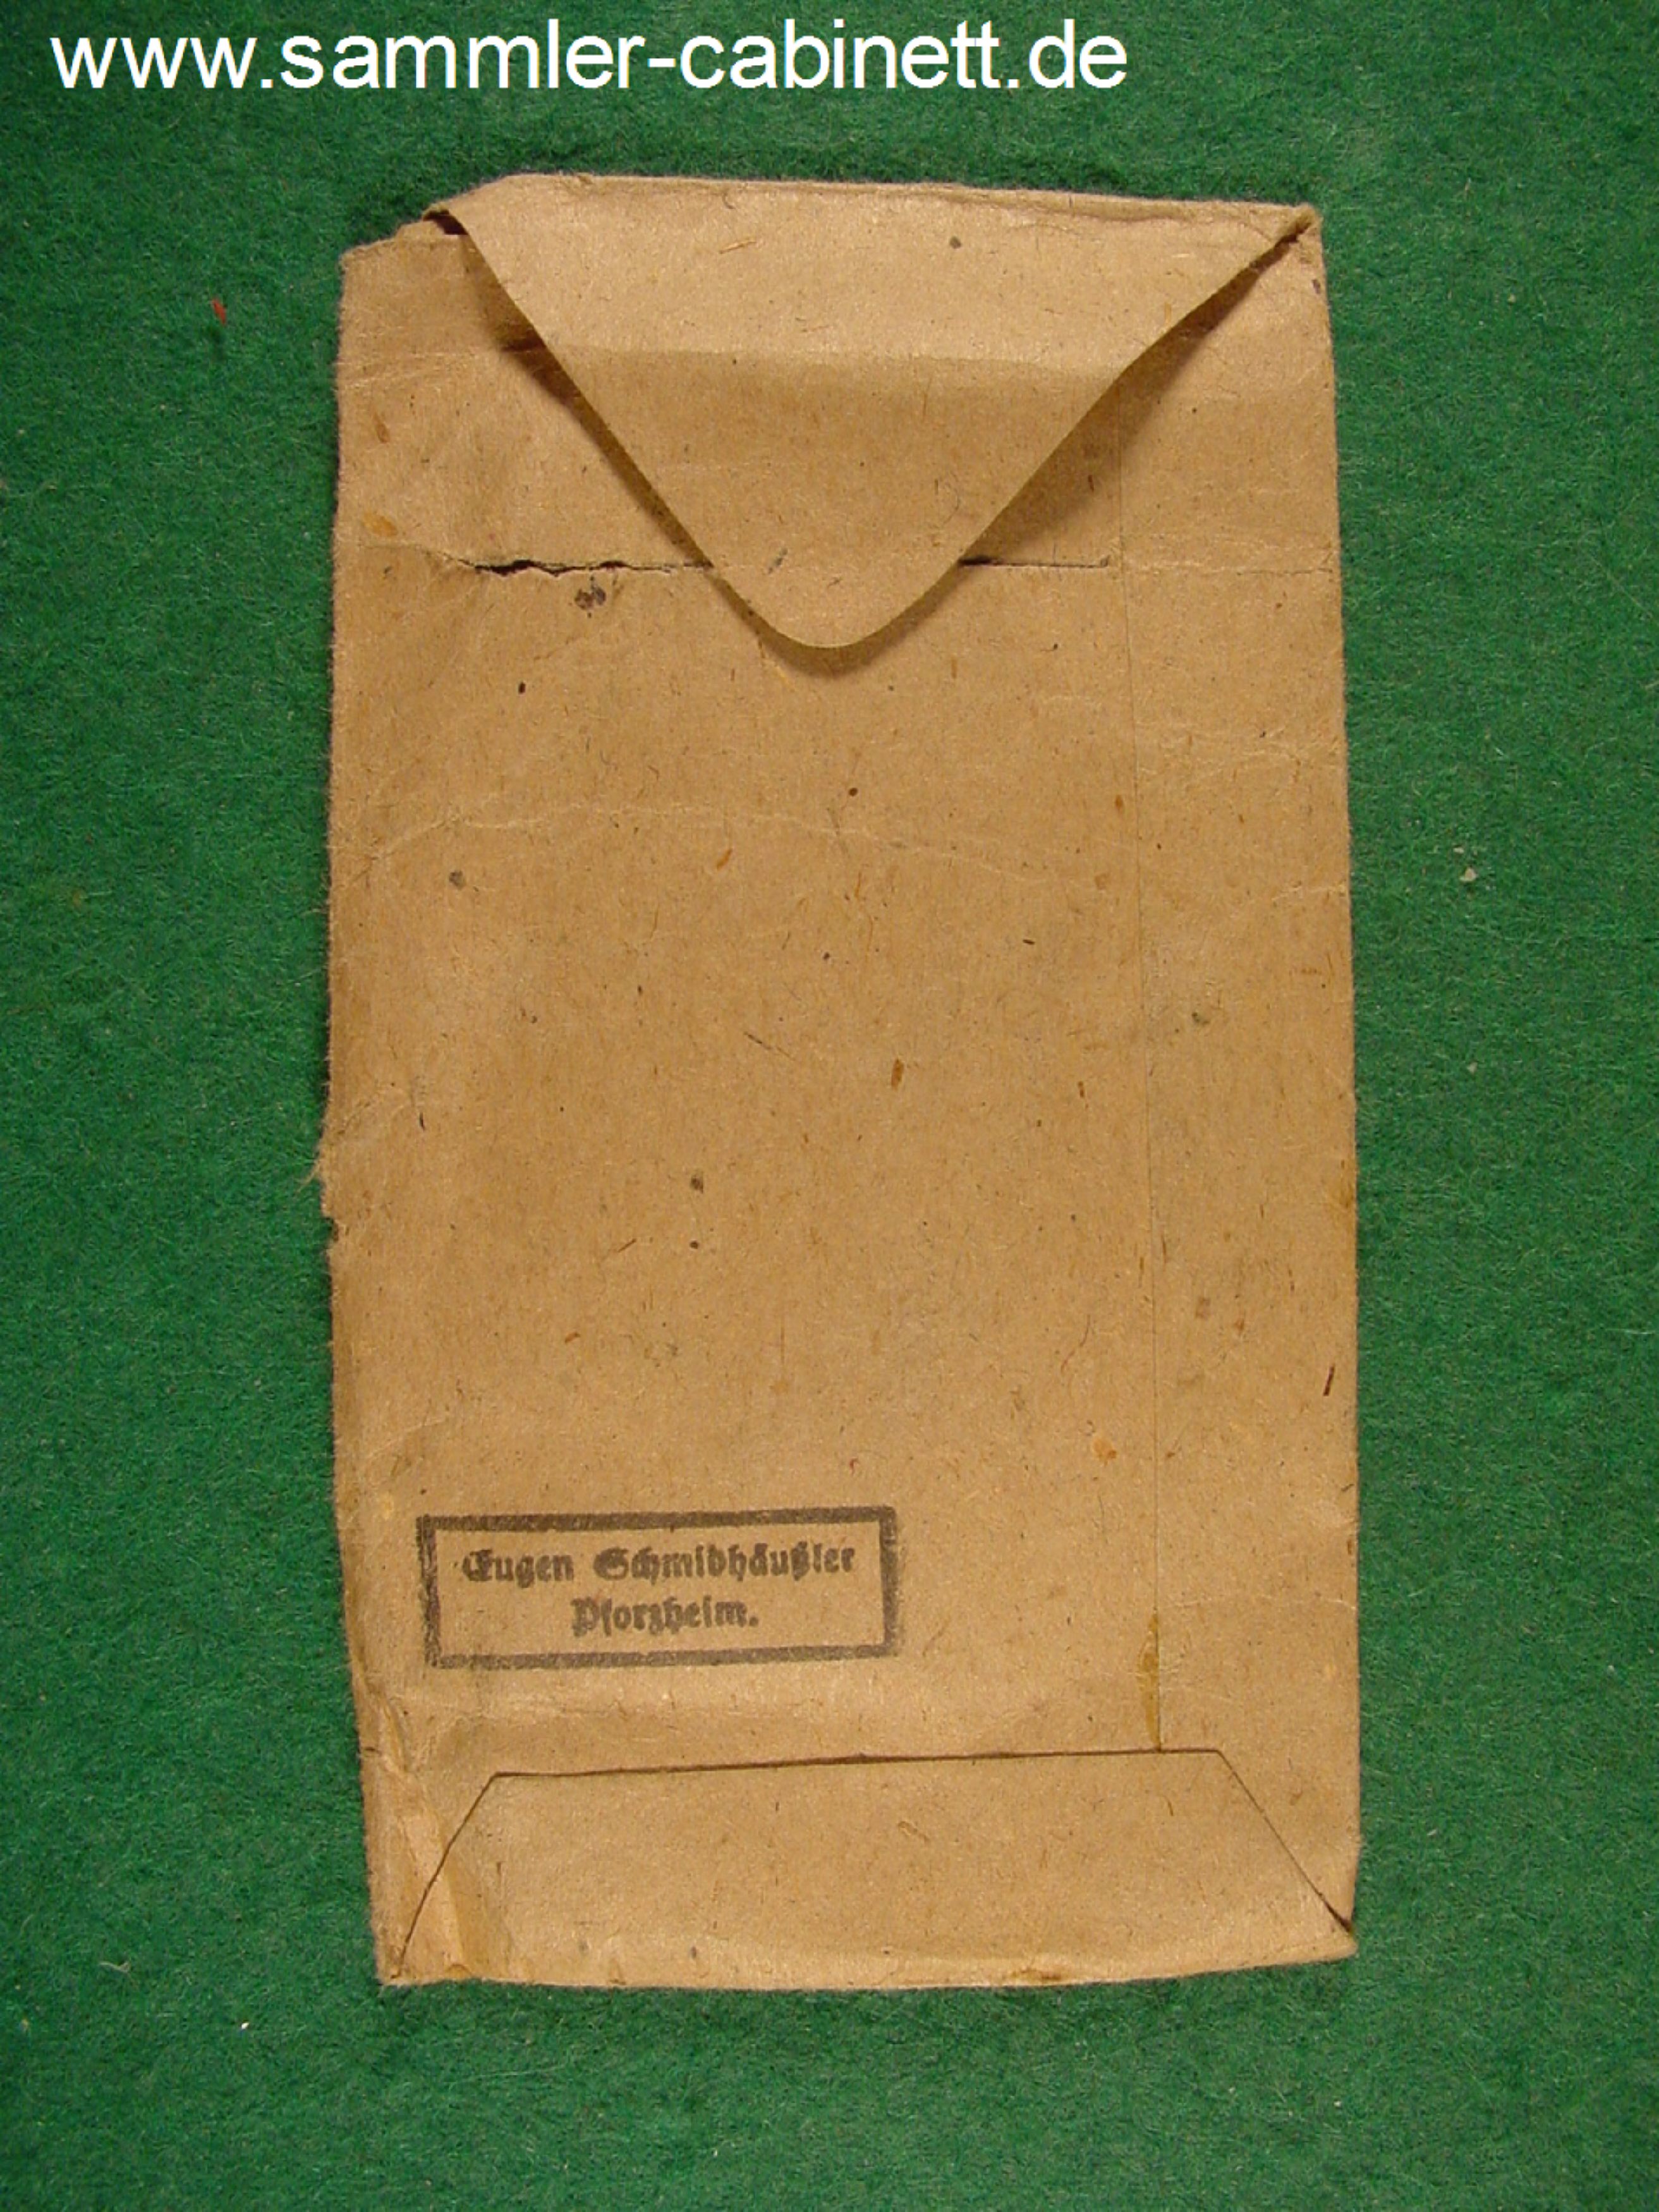 Kriegsverdienstkreuz 1939 - Kreuz der 2. Kl. - Feinzink -...